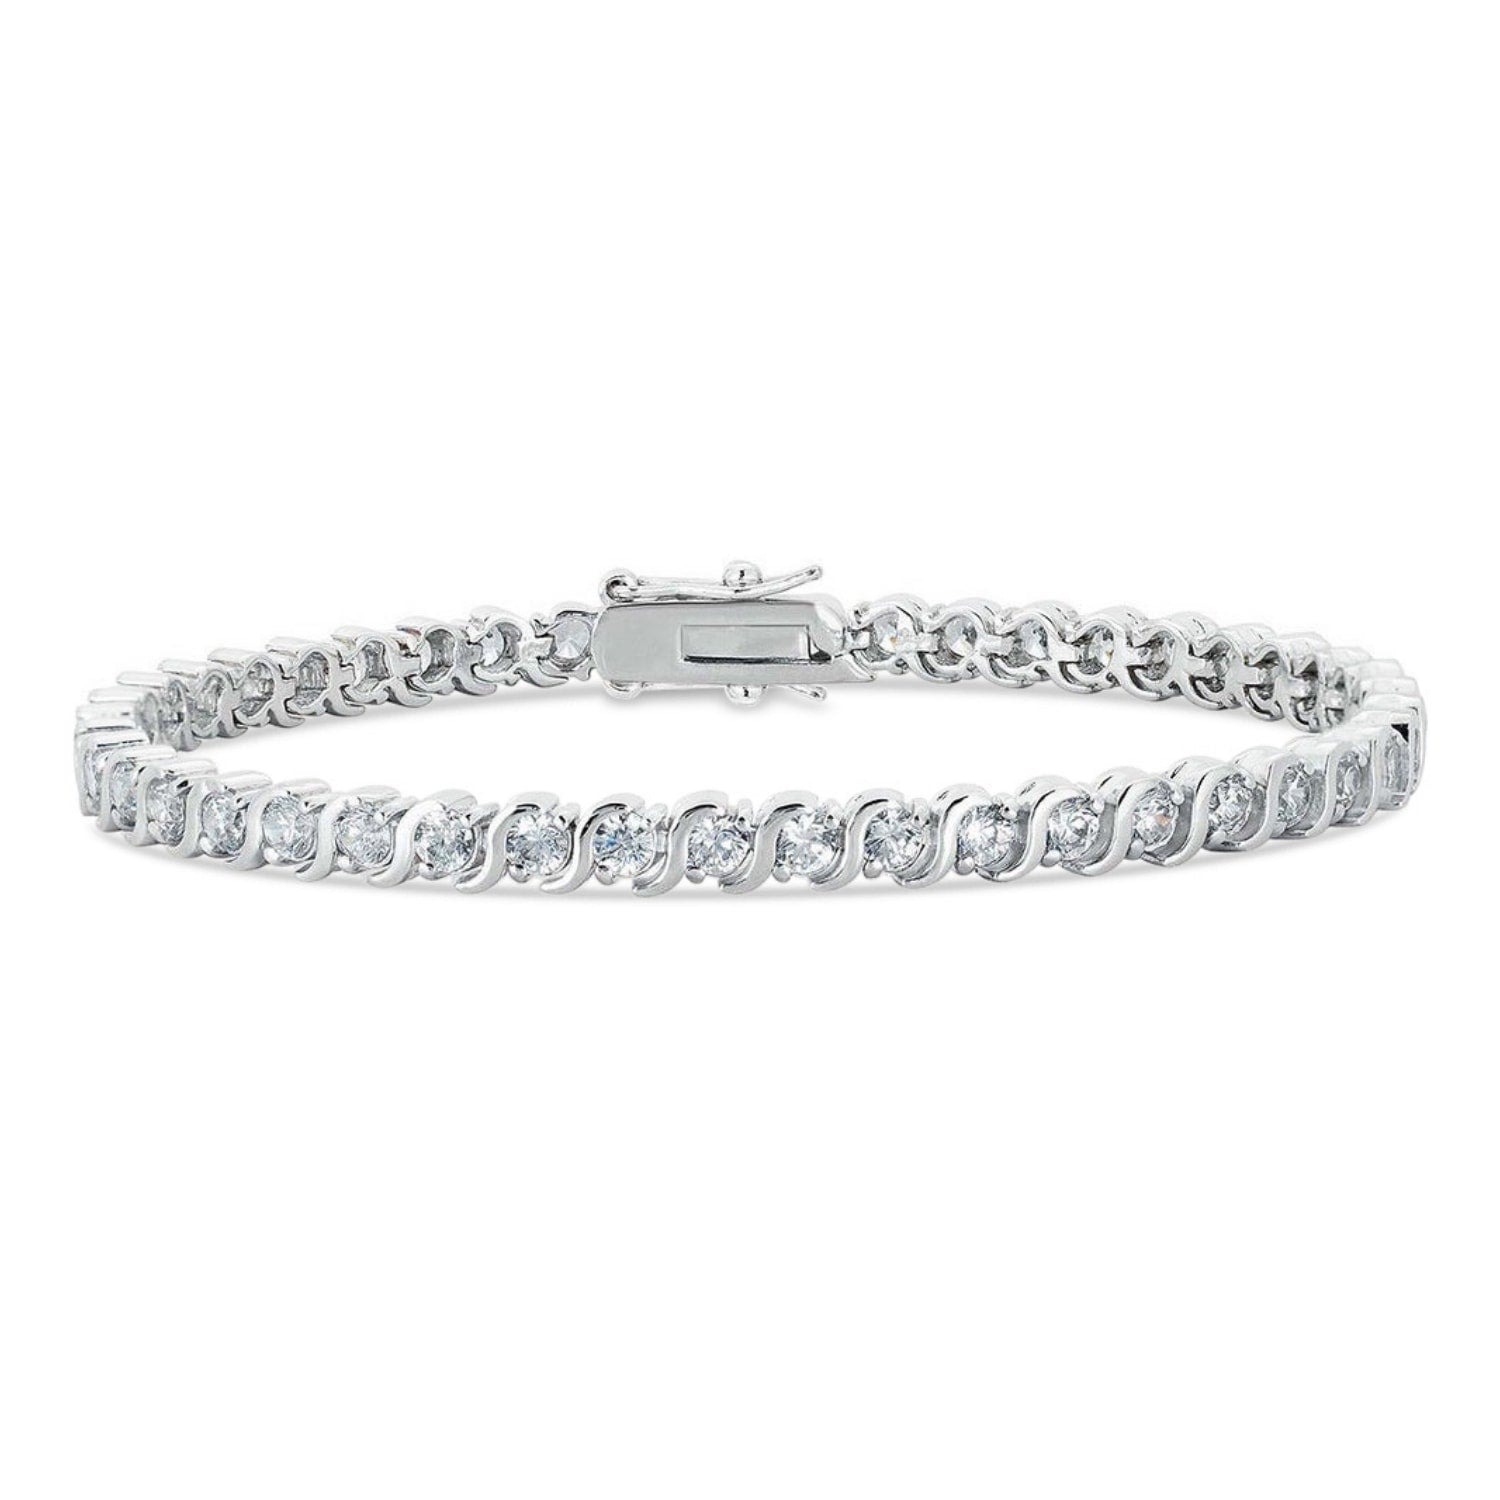 Diamond Bracelets On Girls Wrist Wellgroomed Stock Photo 2147690389 |  Shutterstock